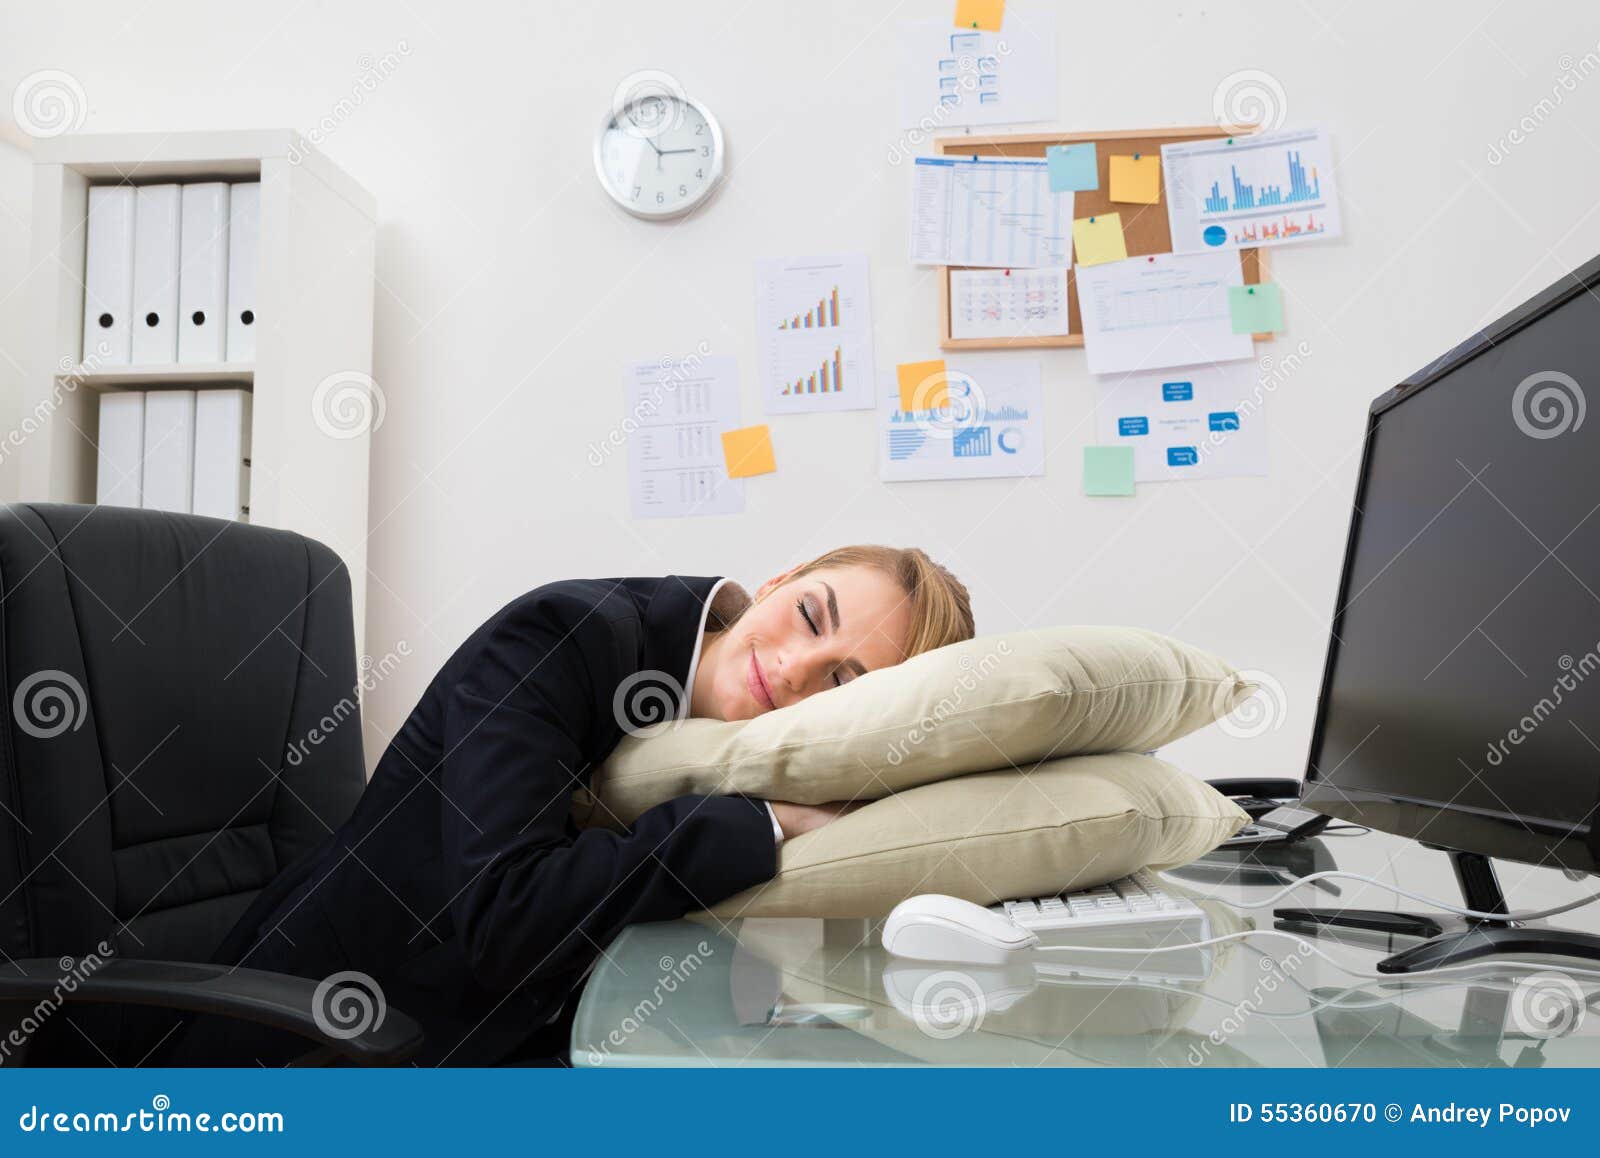 Businesswoman Sleeping In Office Stock Photo Image Of Indoors